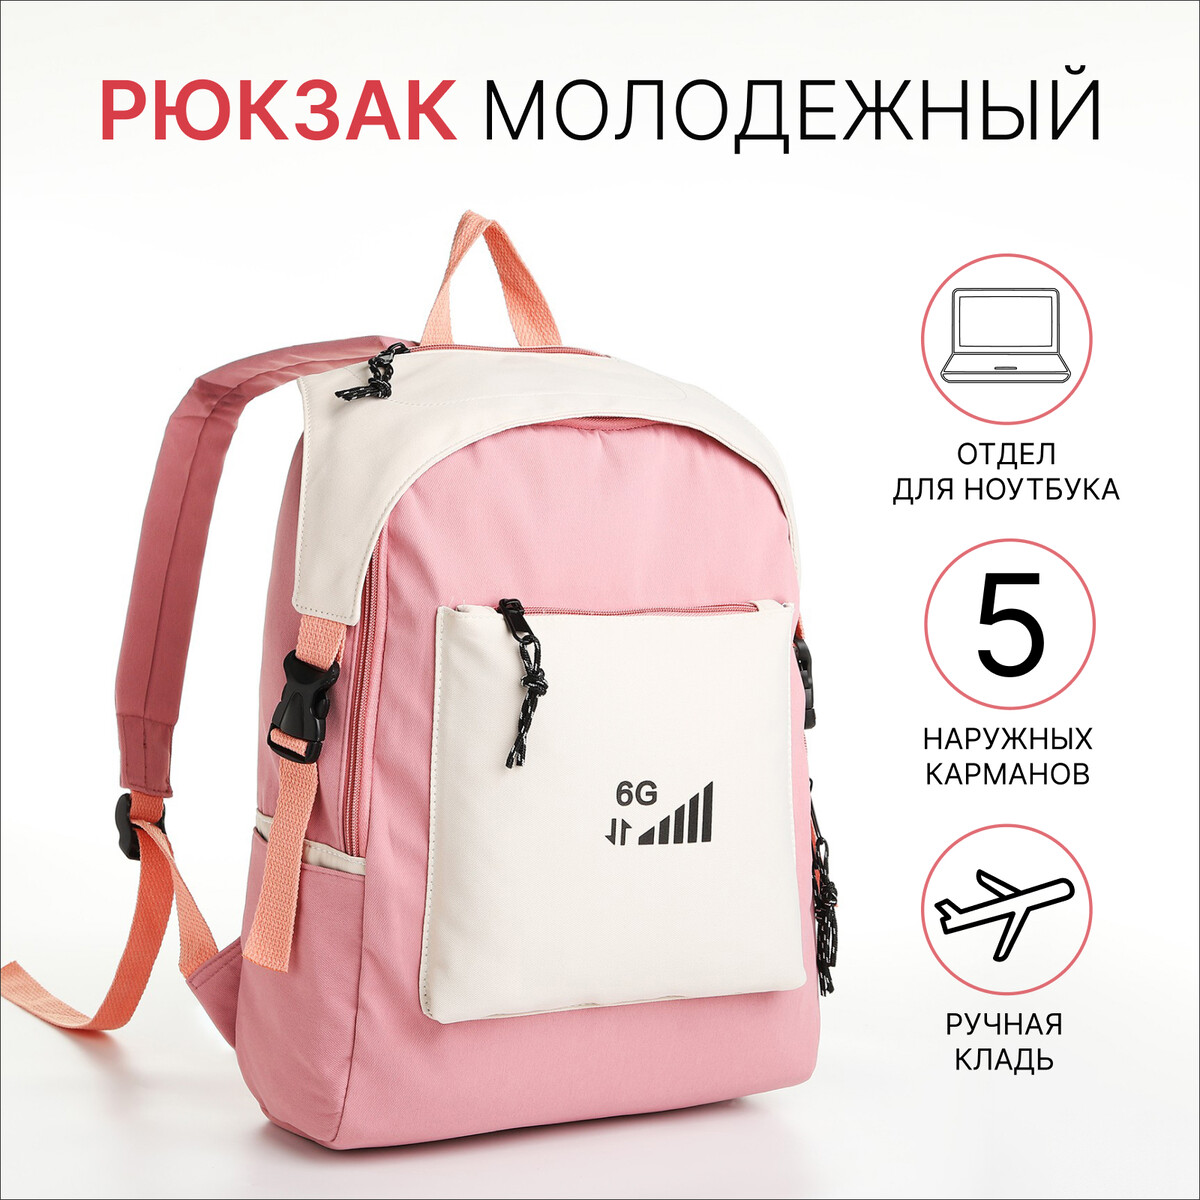 Рюкзак молодежный из текстиля на молнии, 5 карманов, цвет розовый рюкзак молодежный из текстиля на молнии 5 карманов розовый